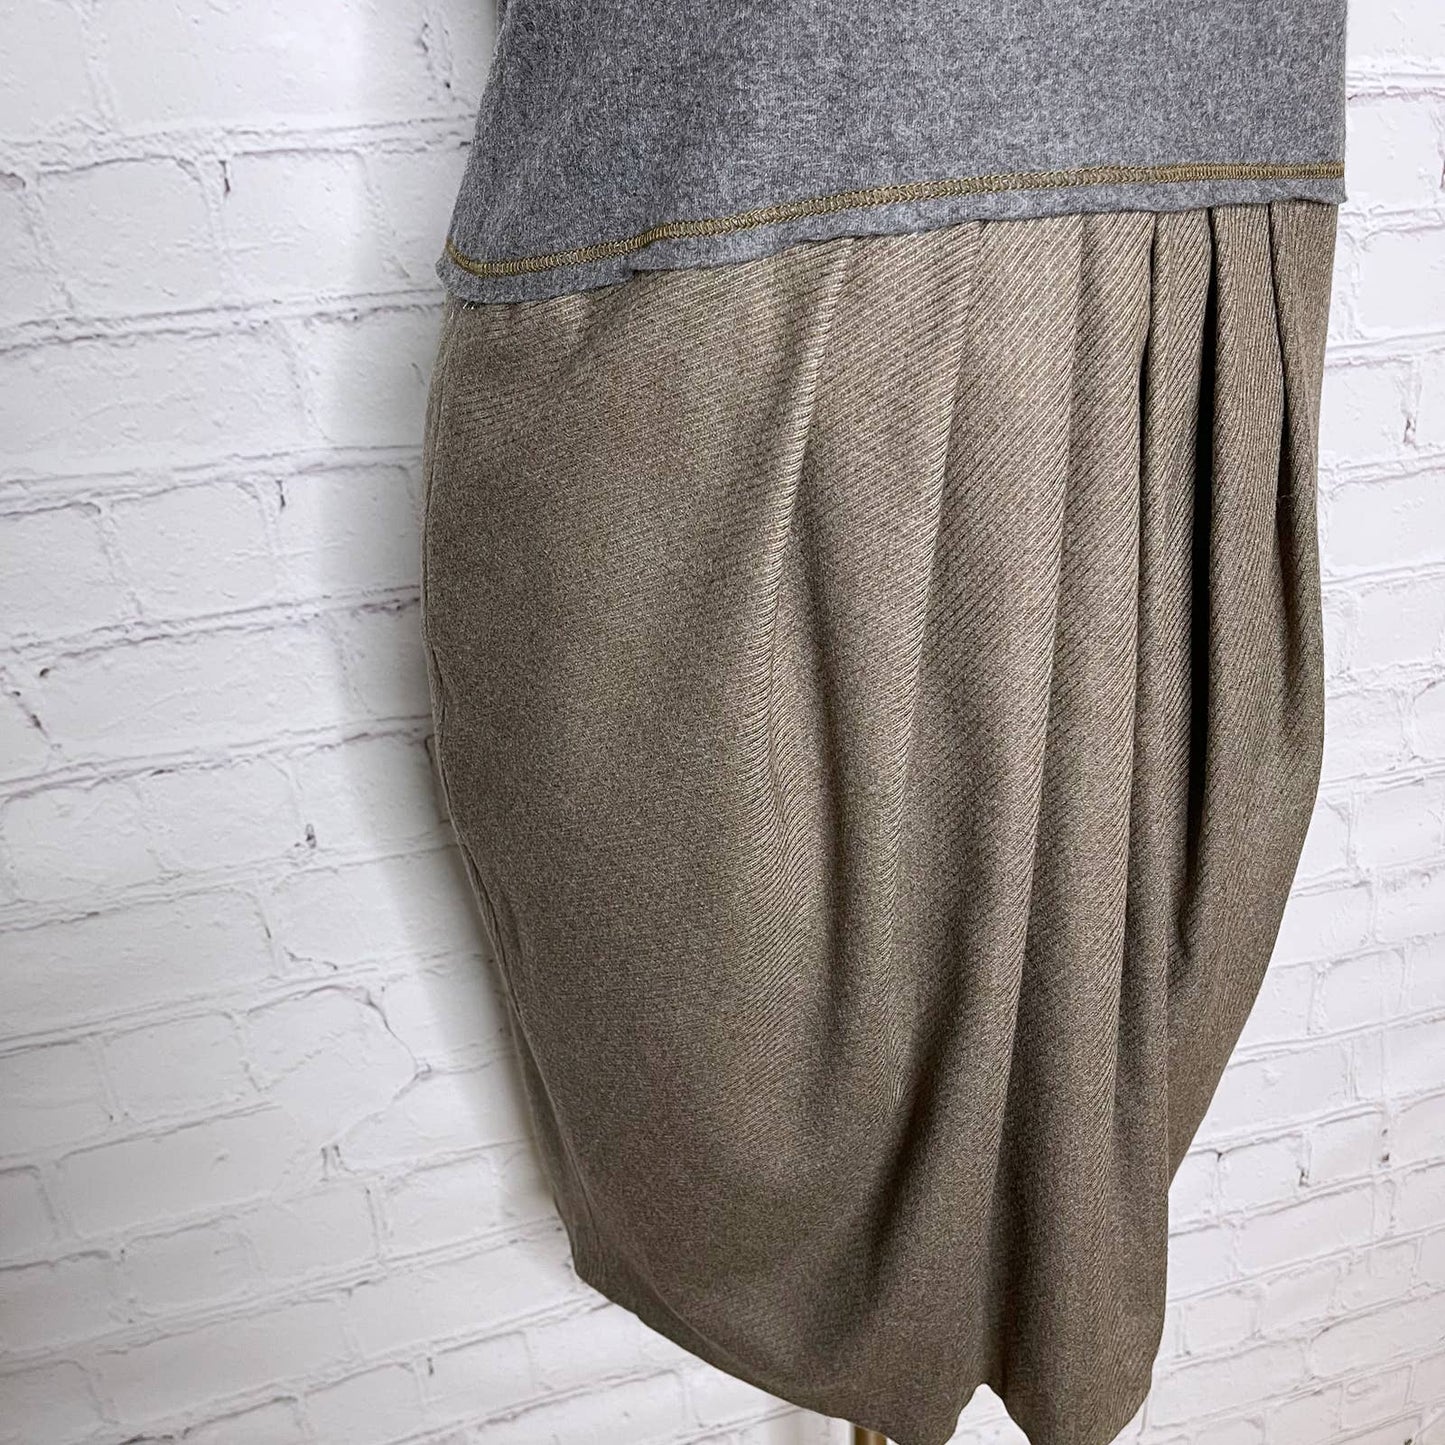 Gunex Wool Halter Dress Gray with Tan Gathered Skirt Sleeveless Size 6